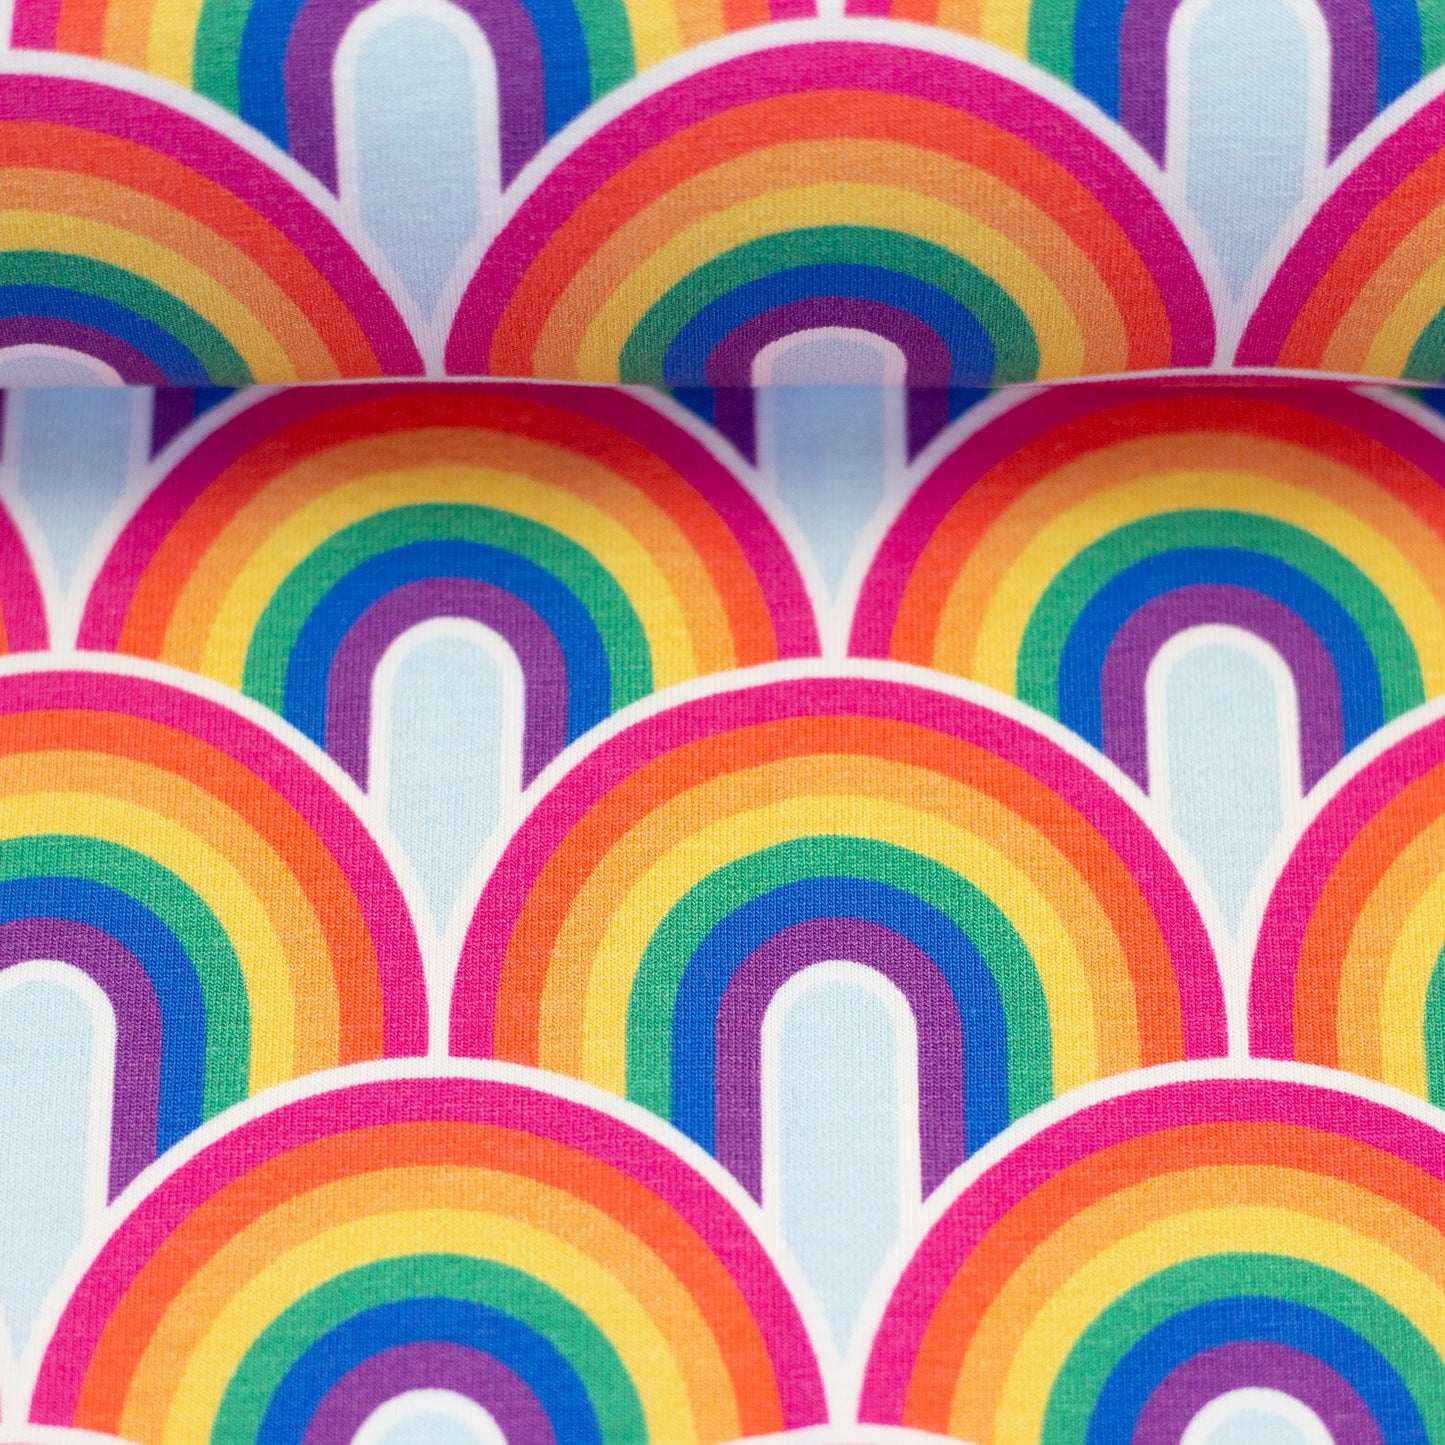 Jersey Rainbows by lycklig design bunt